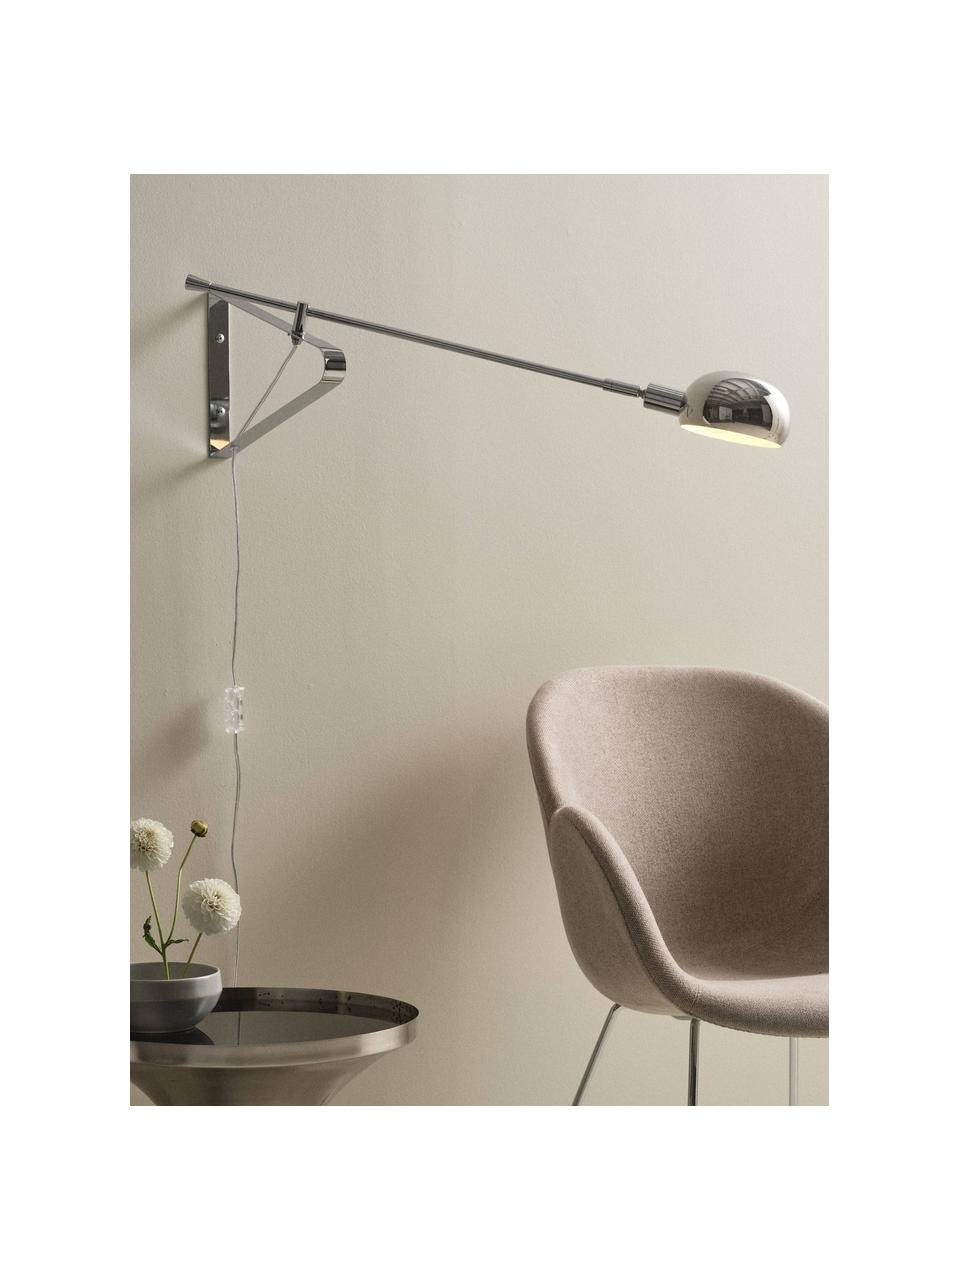 Grote wandlamp Lincon met stekker, Zilverkleurig, D 80 x H 21 cm